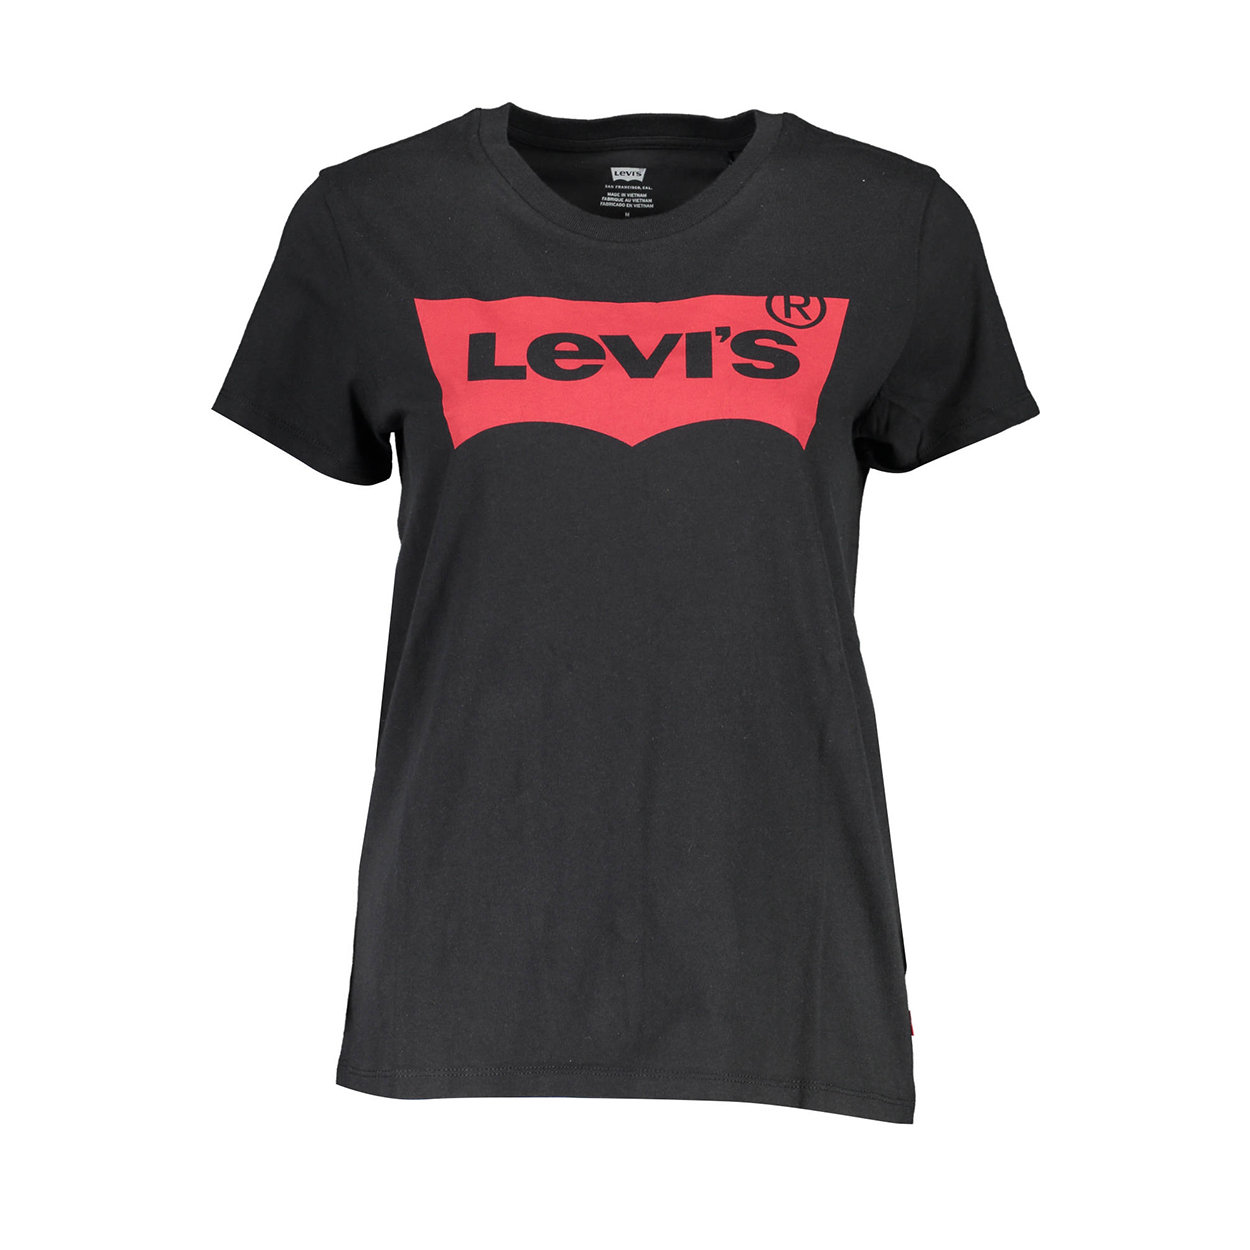 Levi's Women's Short Sleeve T-Shirt - Levi's - Purchase on Ventis.